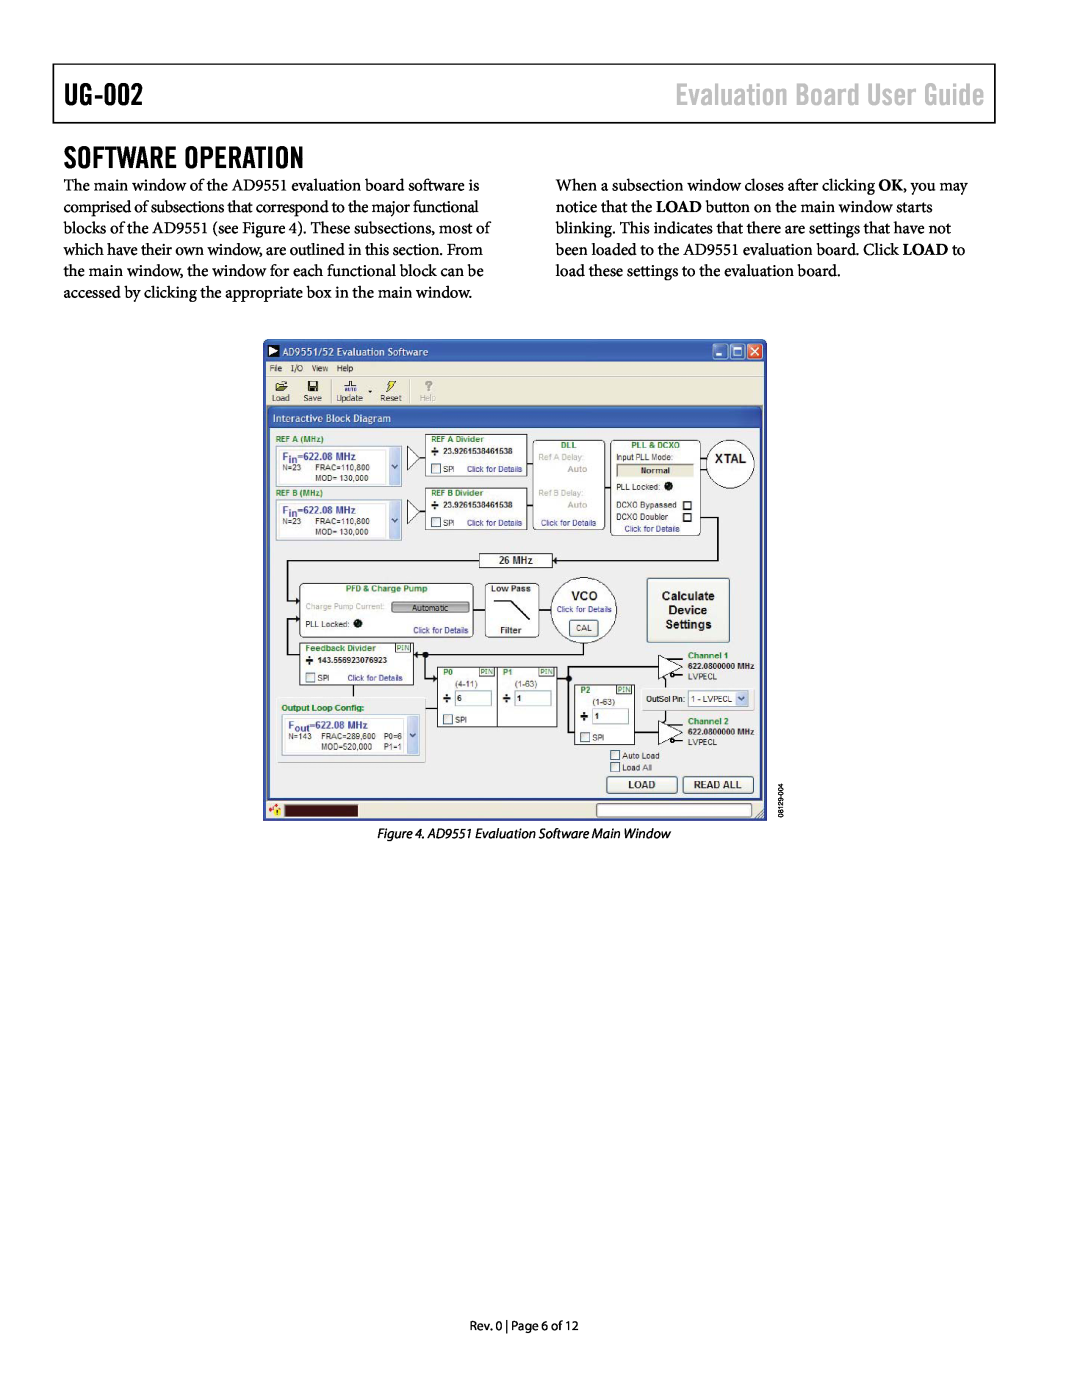 Analog Devices UG-002 manual Software Operation, Evaluation Board User Guide, AD9551 Evaluation Software Main Window 